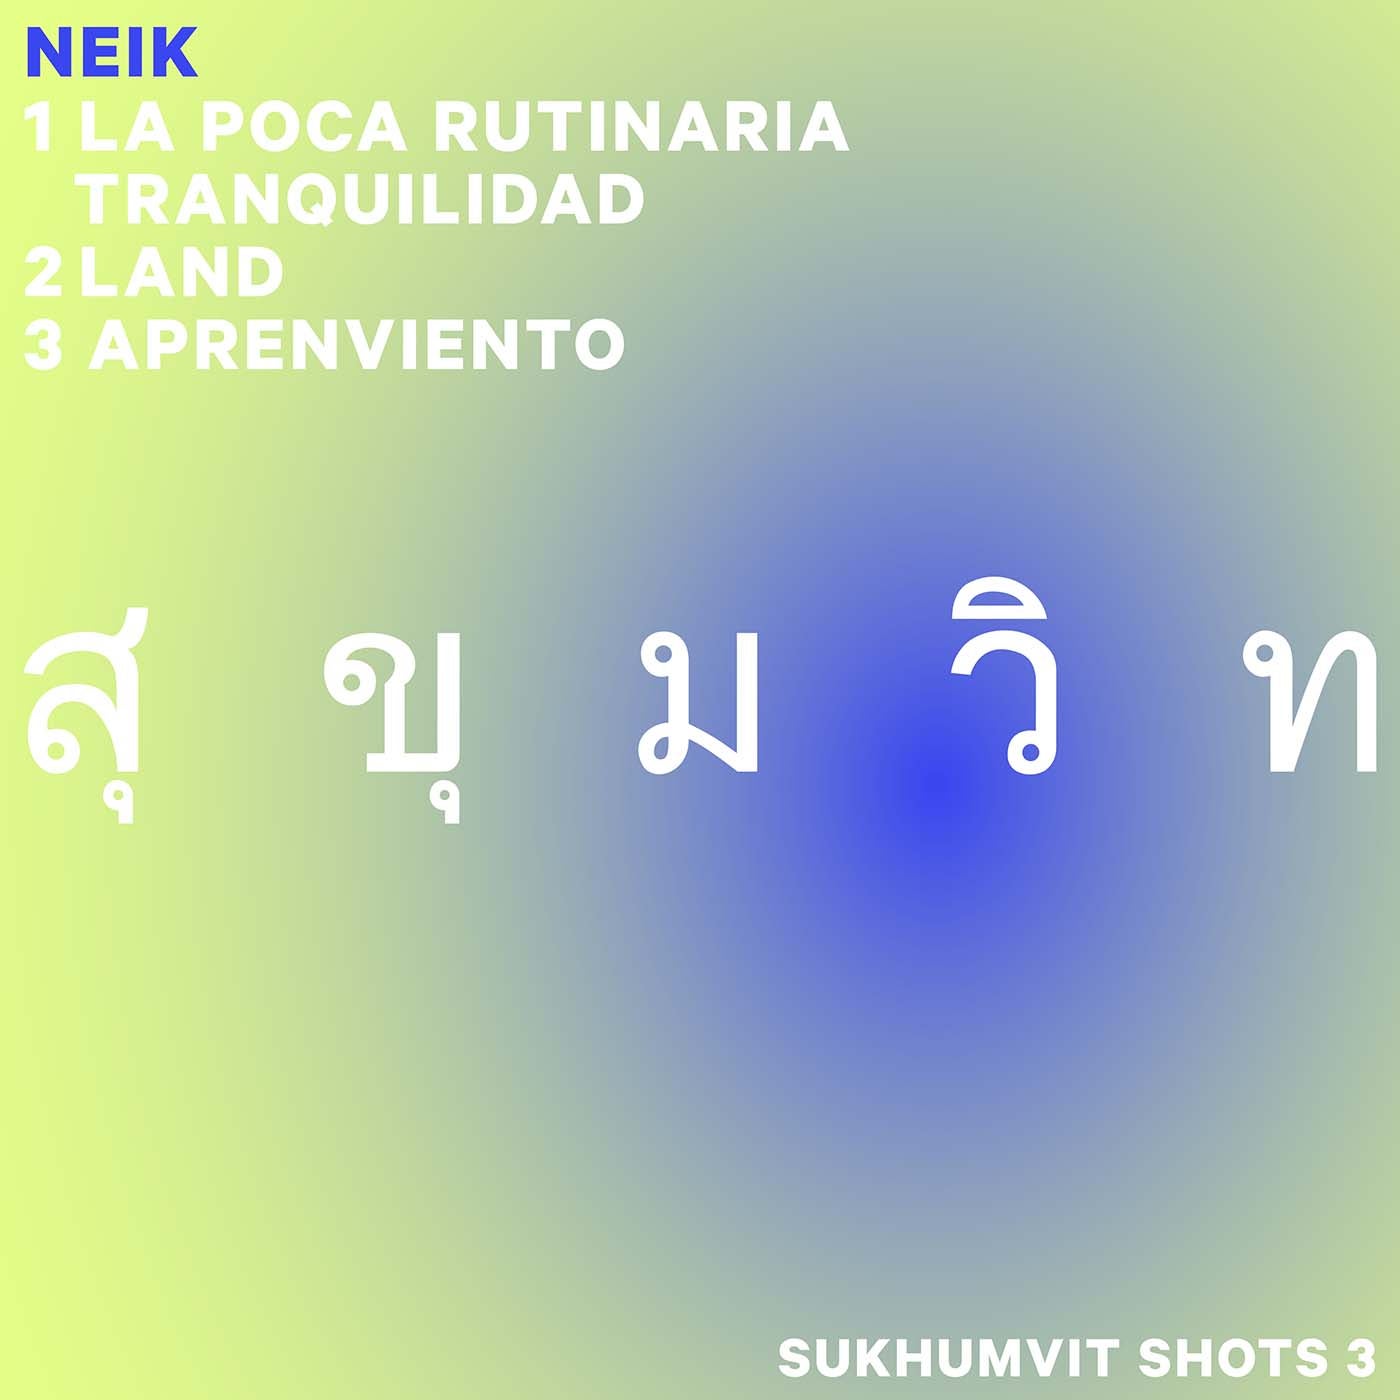 Sukhumvit Shots 3